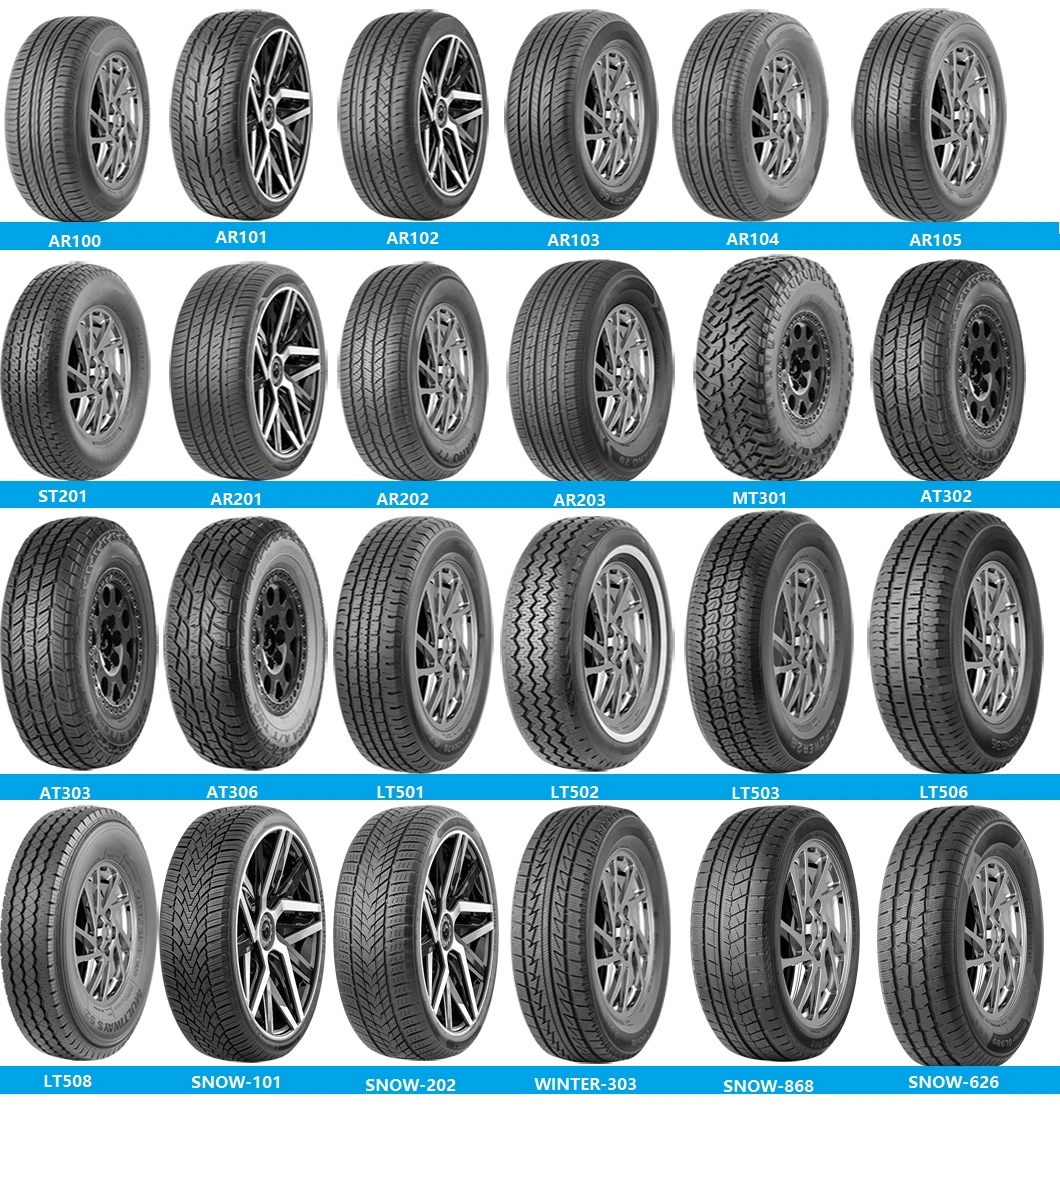 185/70r14 Radial Car Tire Passenger Tires Auto Tires